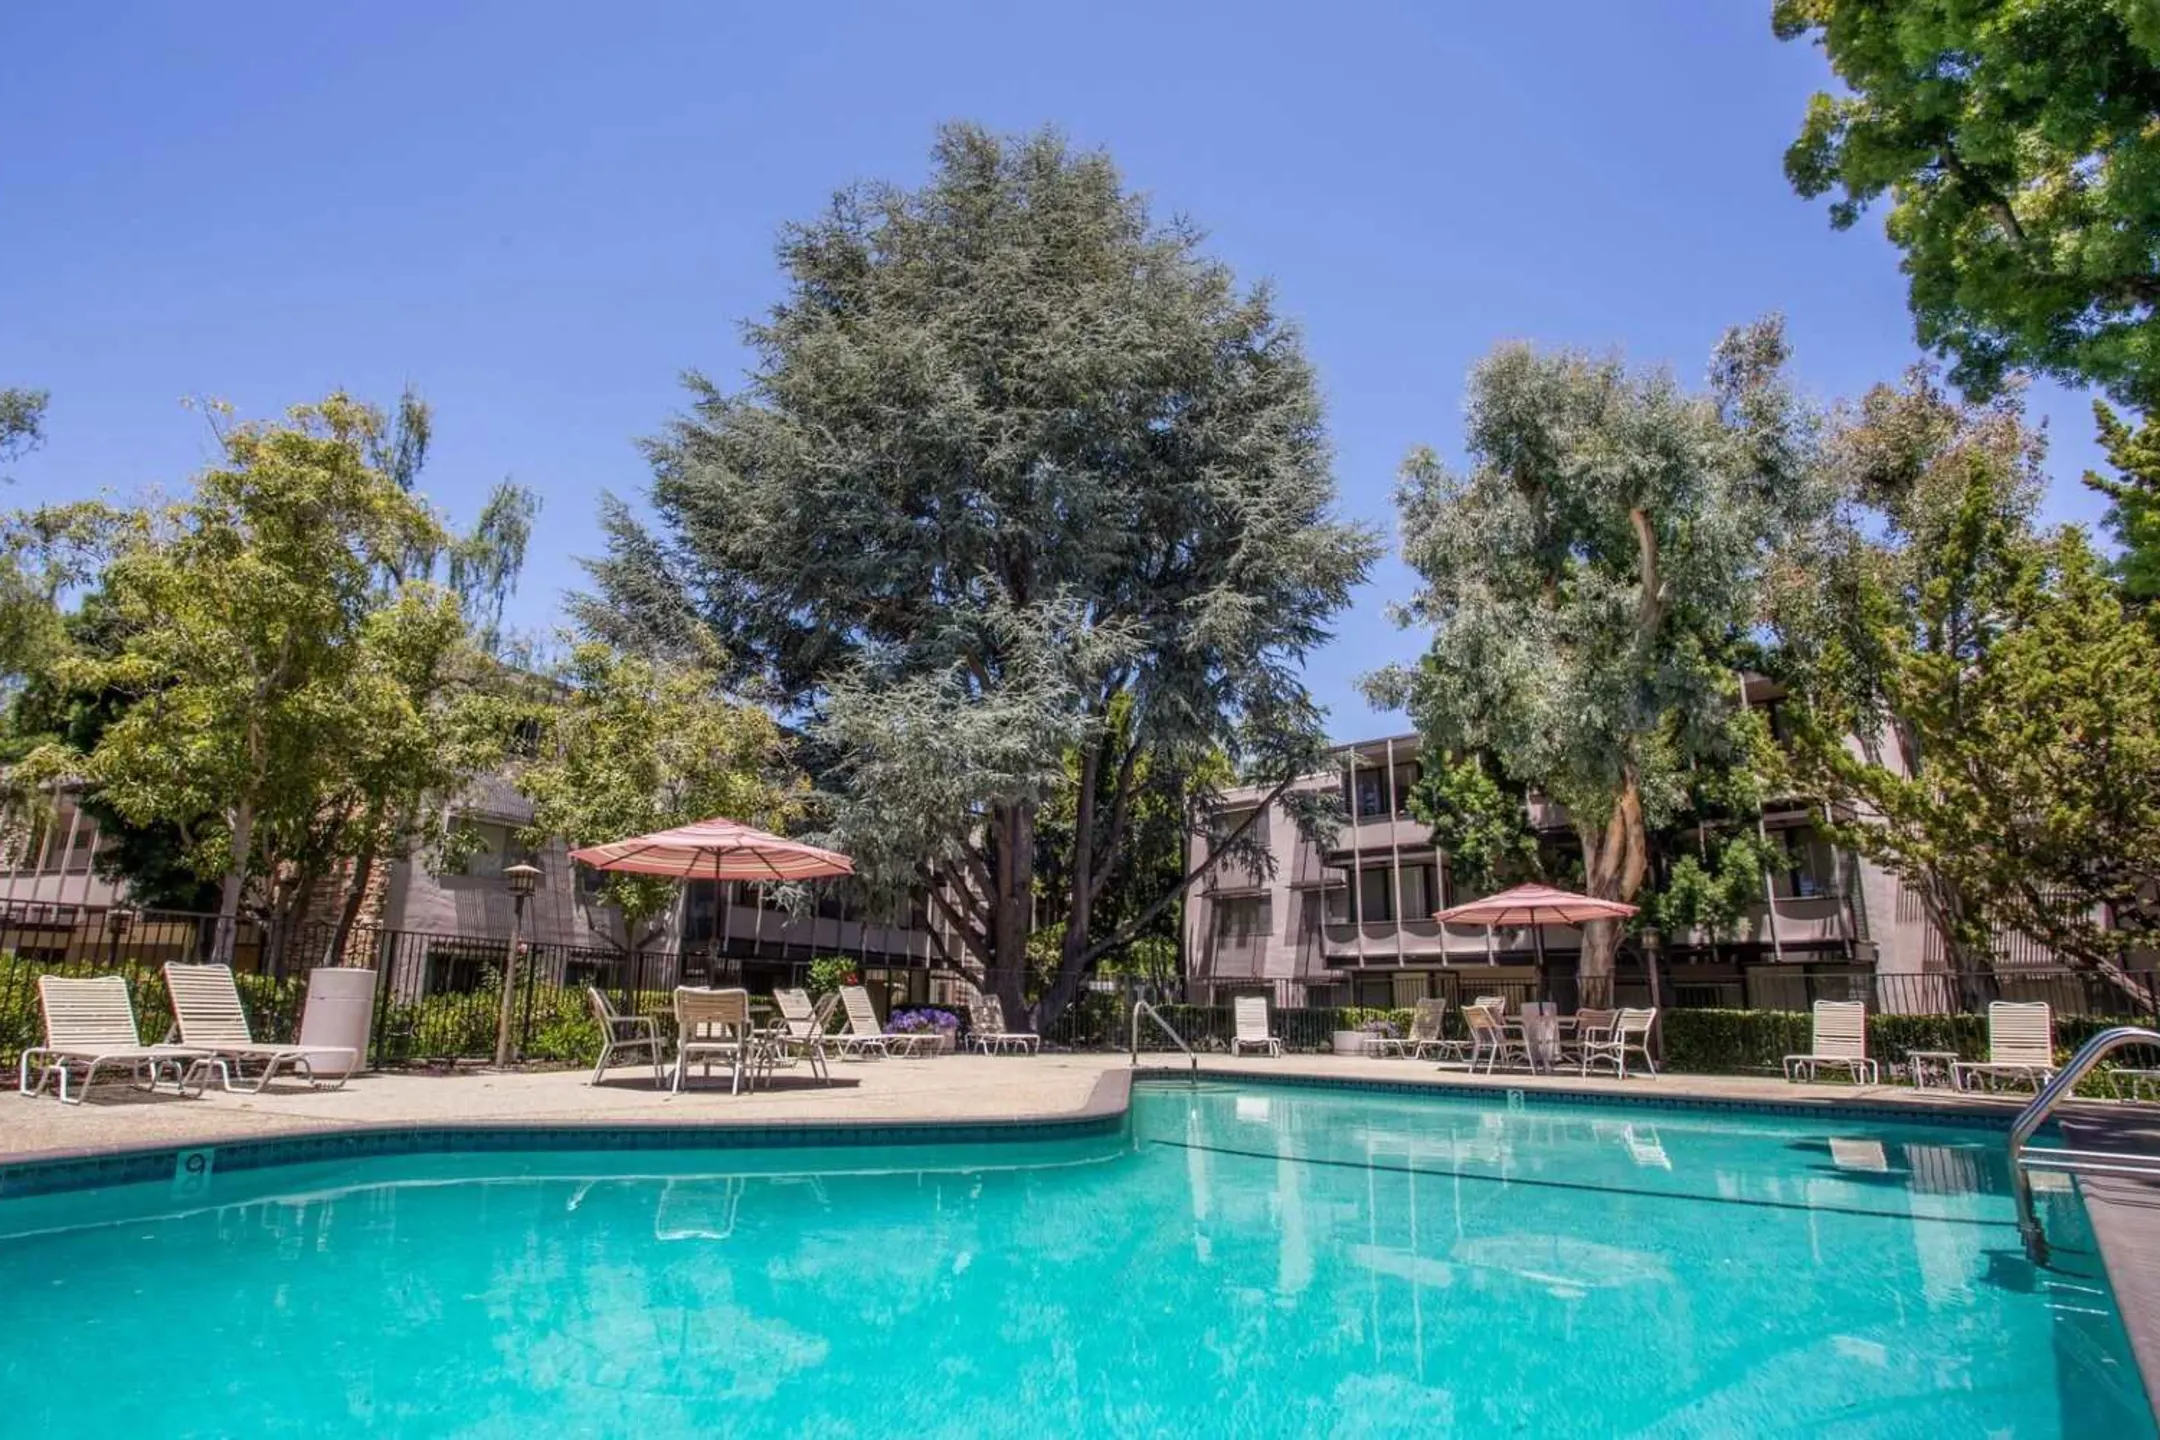 Pool - Parksquare Apartments - Palo Alto, CA